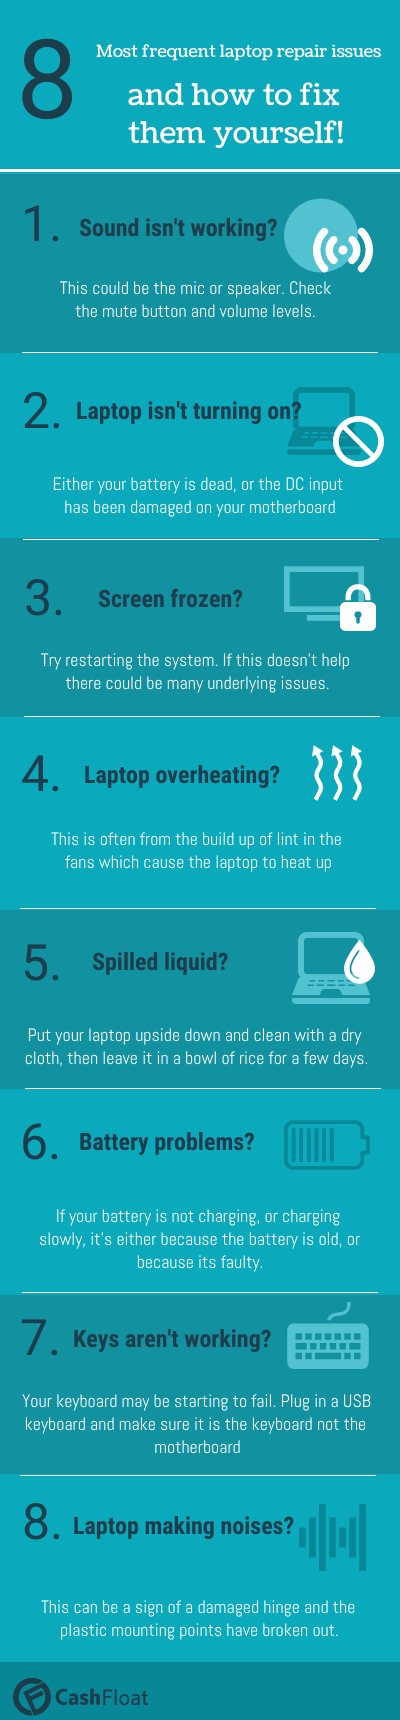 8 DIY repair tips for common laptop problems - Cashfloat